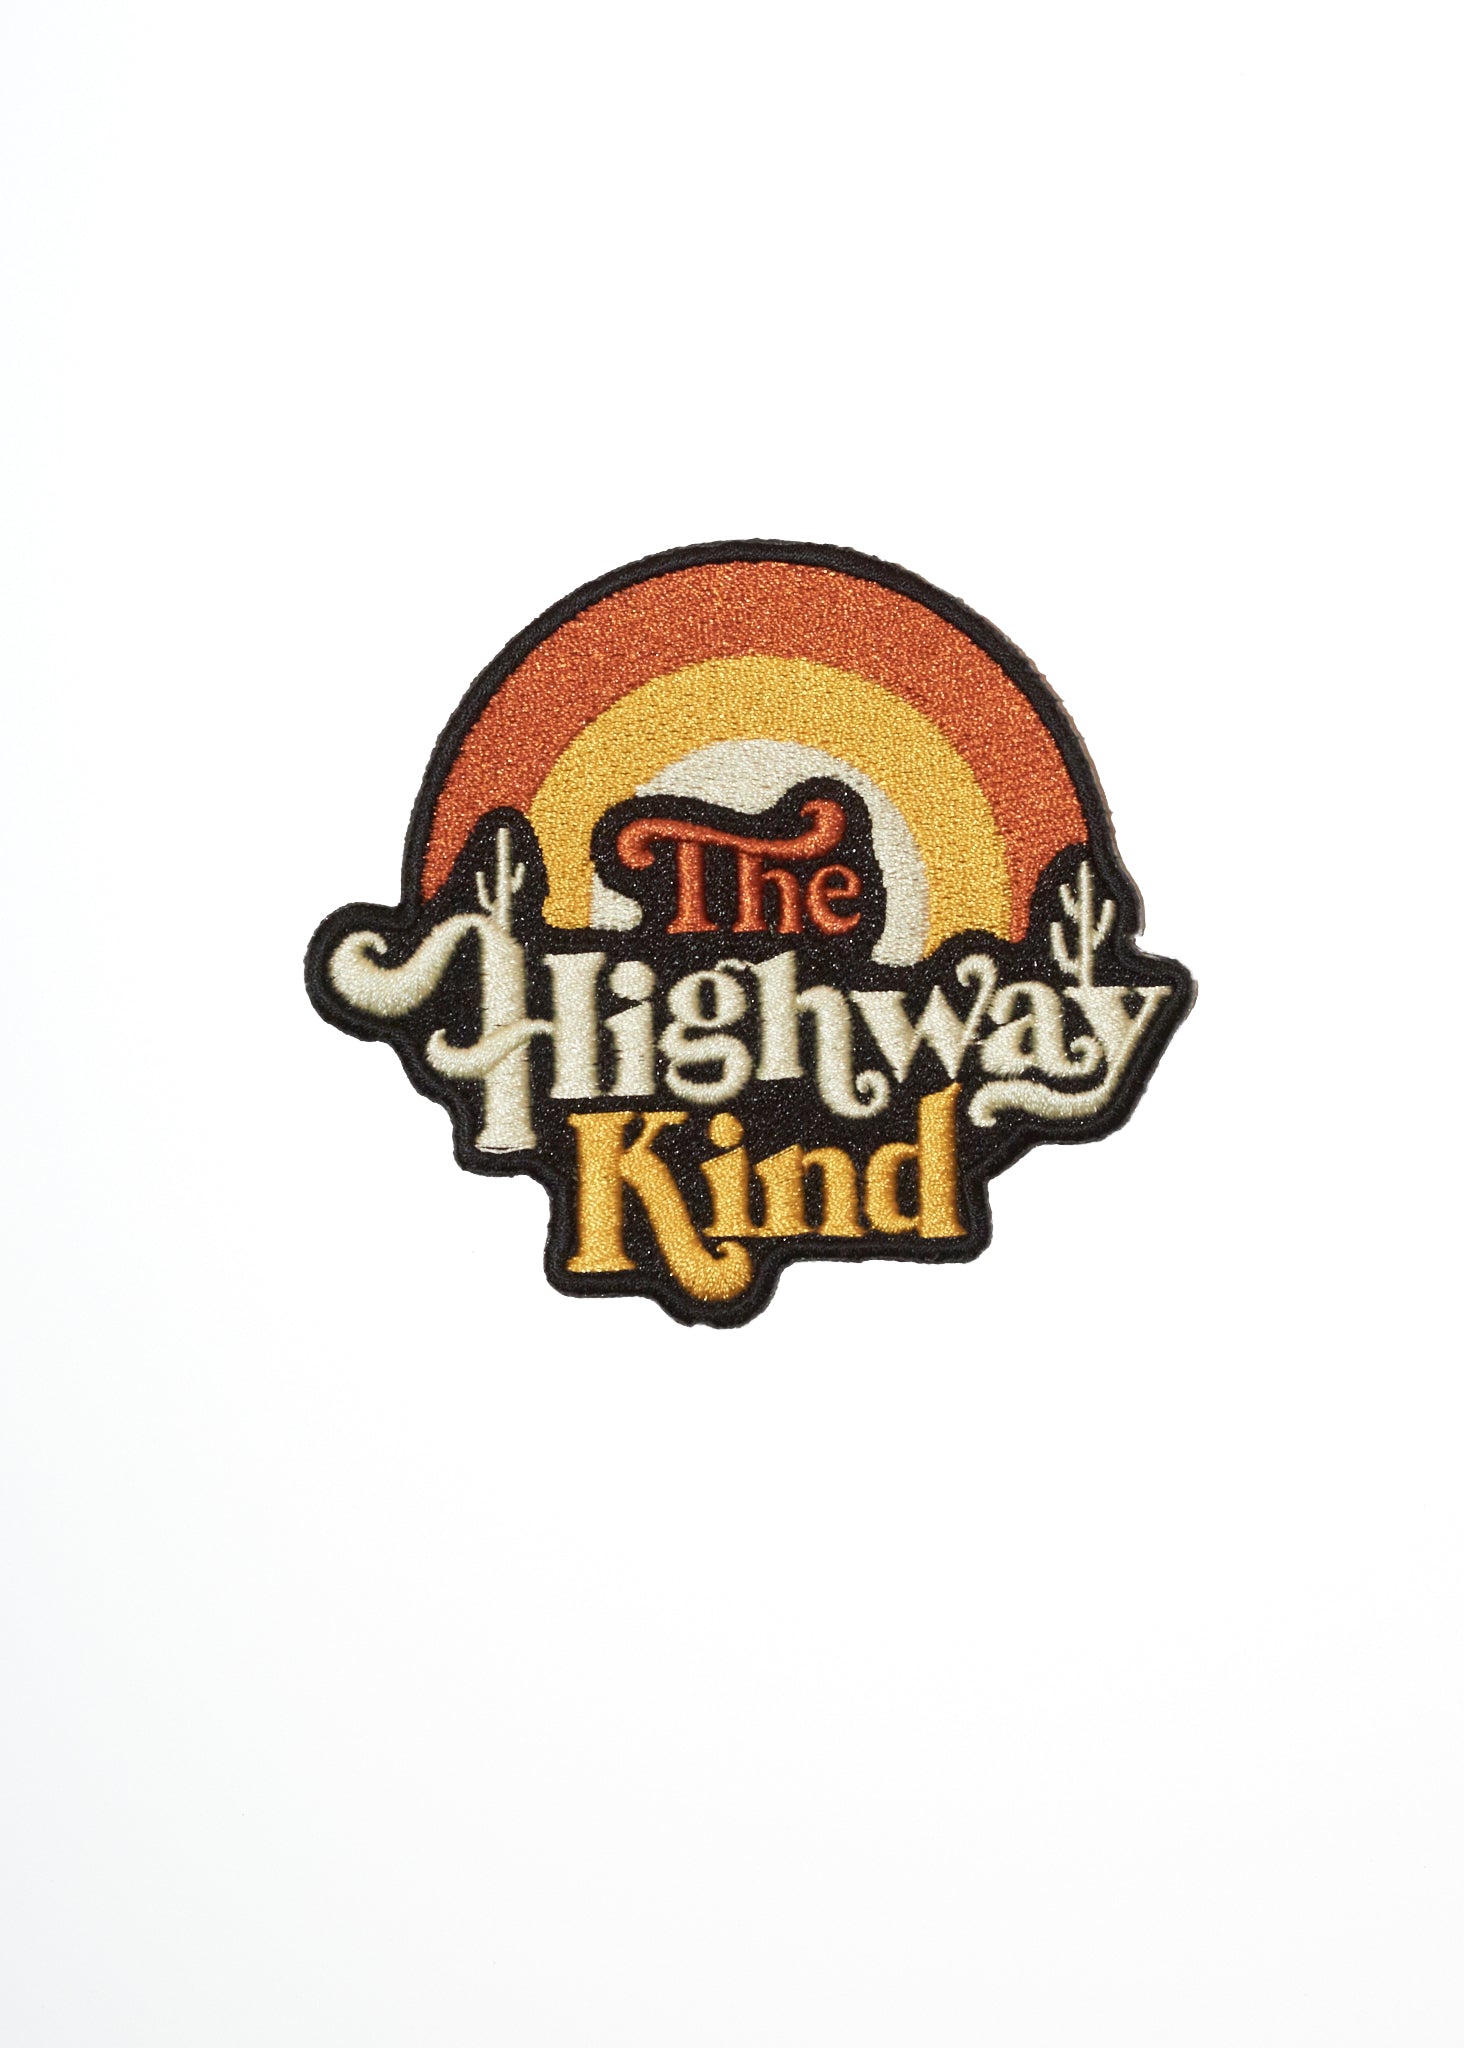 Townes Van Zandt Highway Kind Patch - Accessories - Midnight Rider